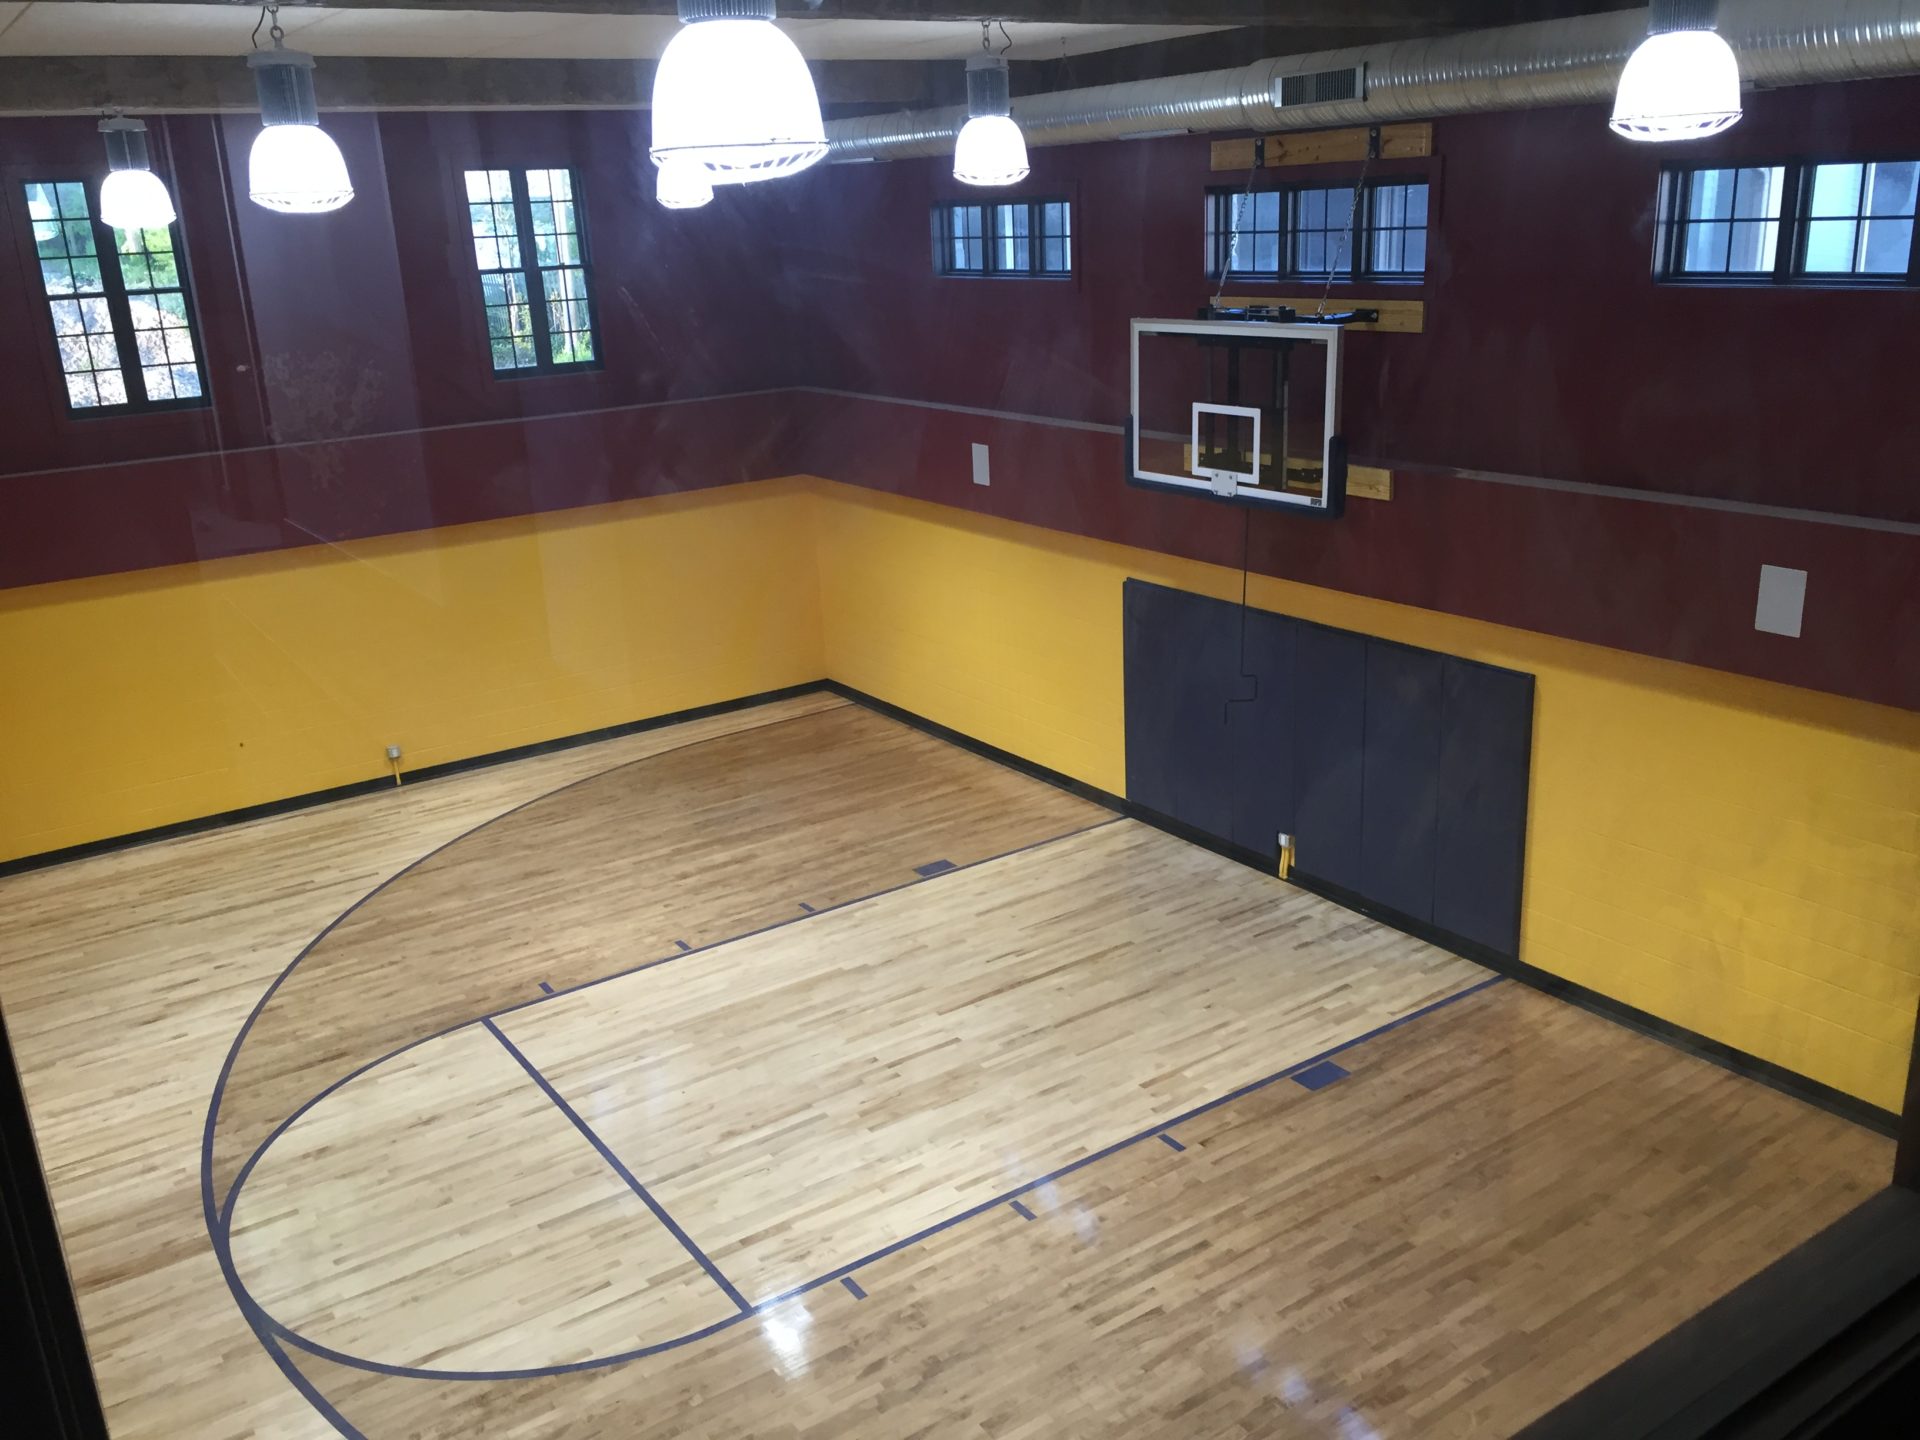 evergreen-portfolio-lakewood-french-country-tudor-interior-basketball-court